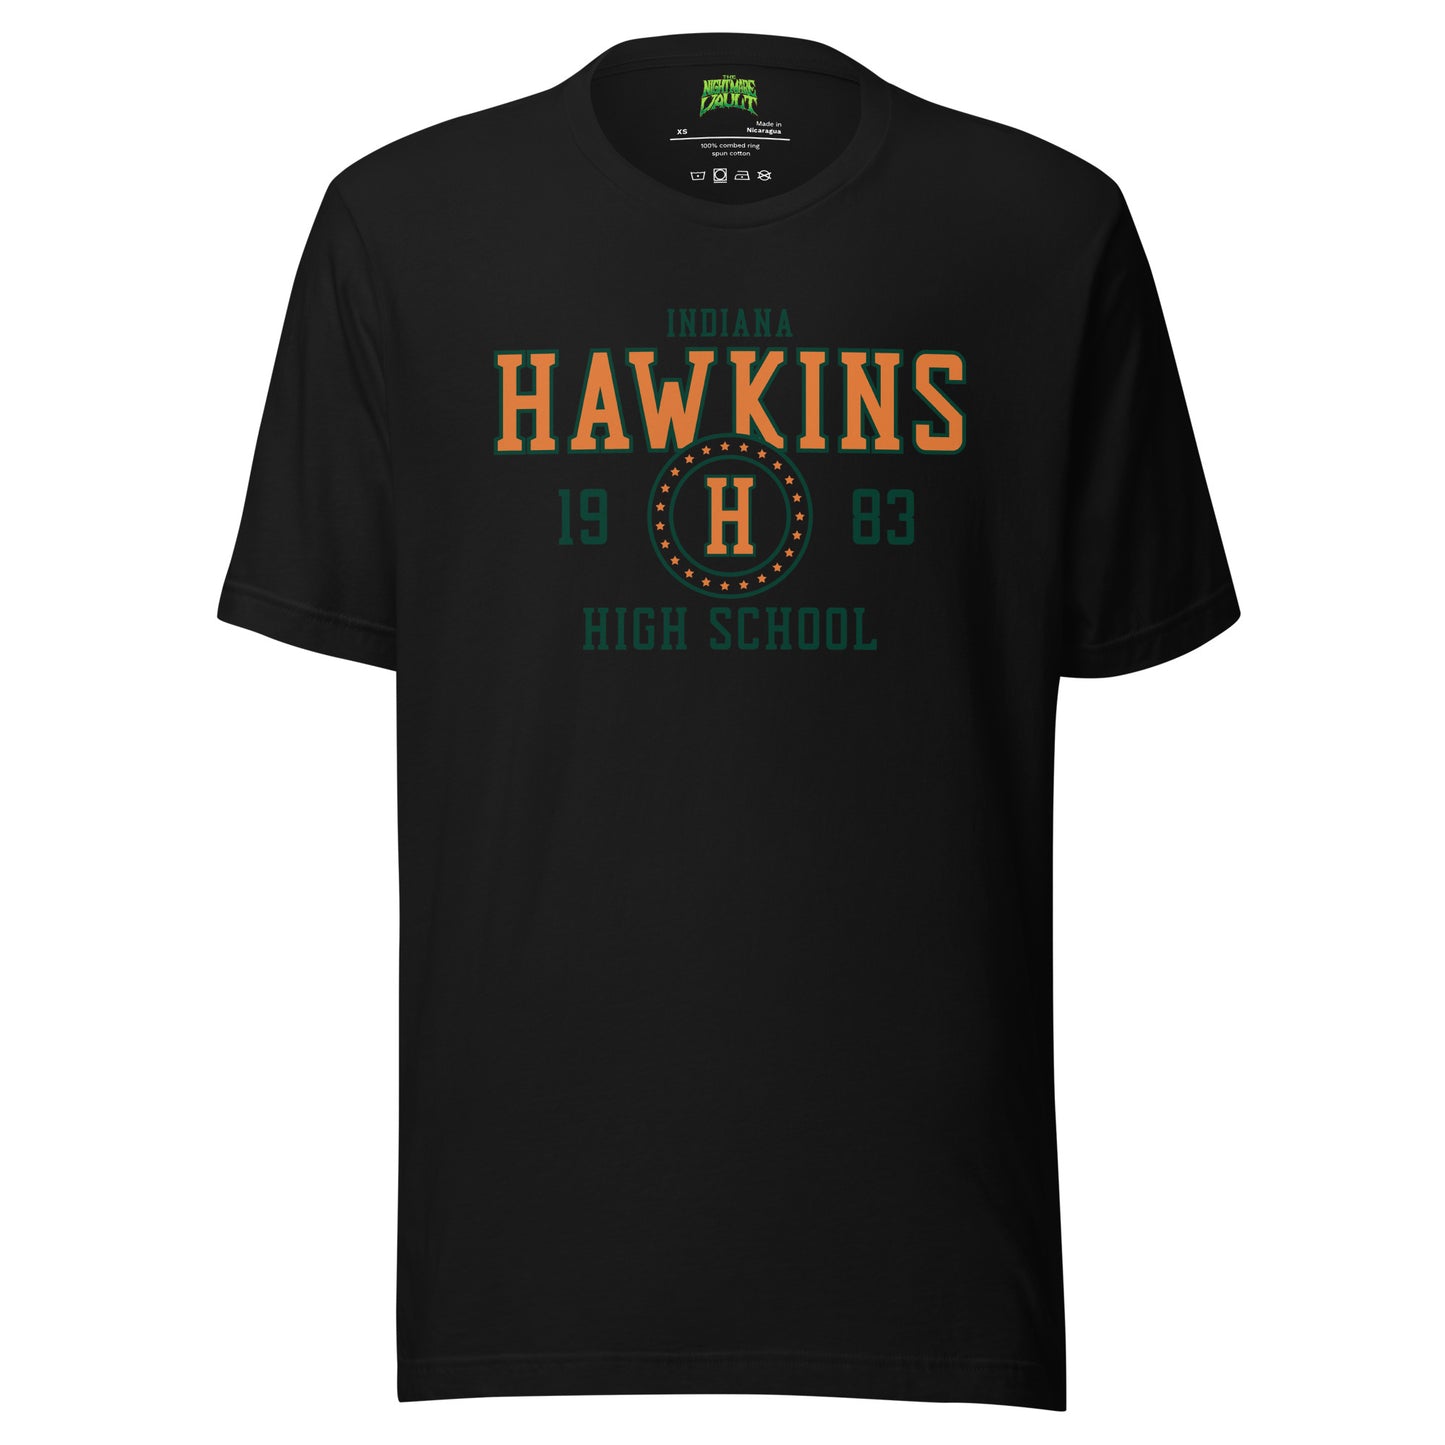 Hawkins High School Athletic Dept tee